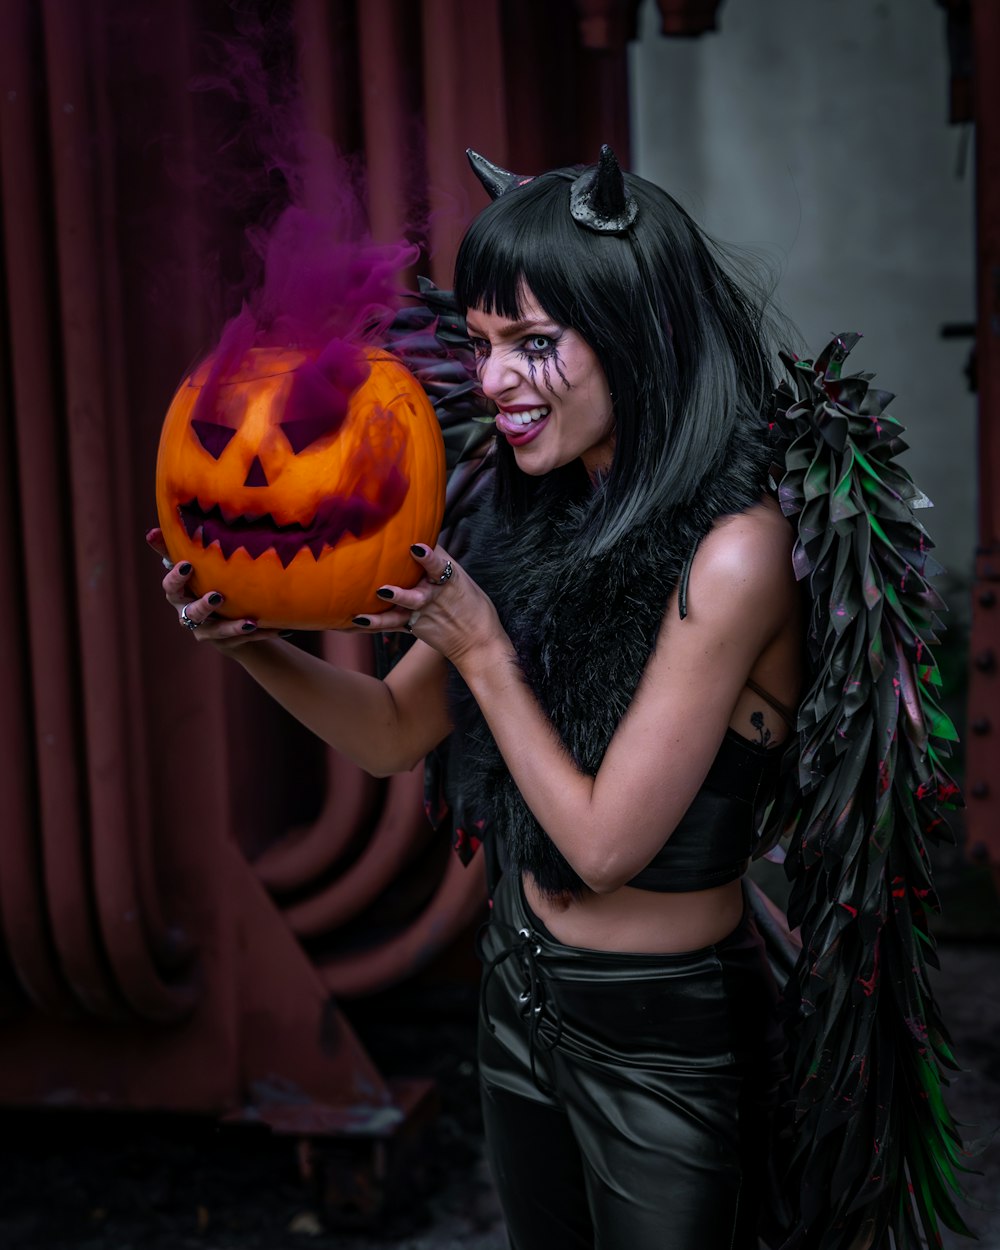 a woman in a costume holding a pumpkin